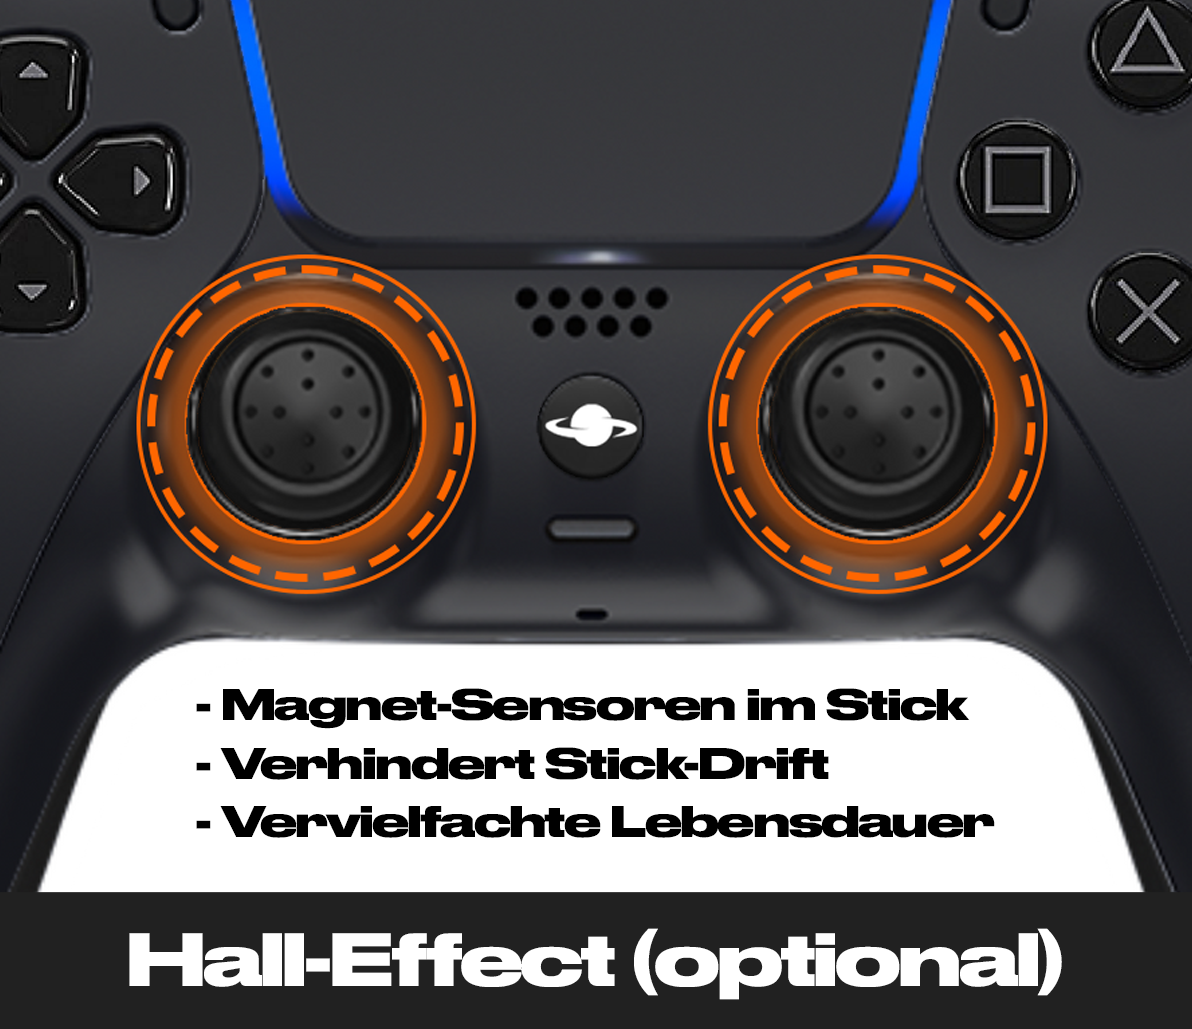 PS5 Custom Controller 'Blue Swirl'